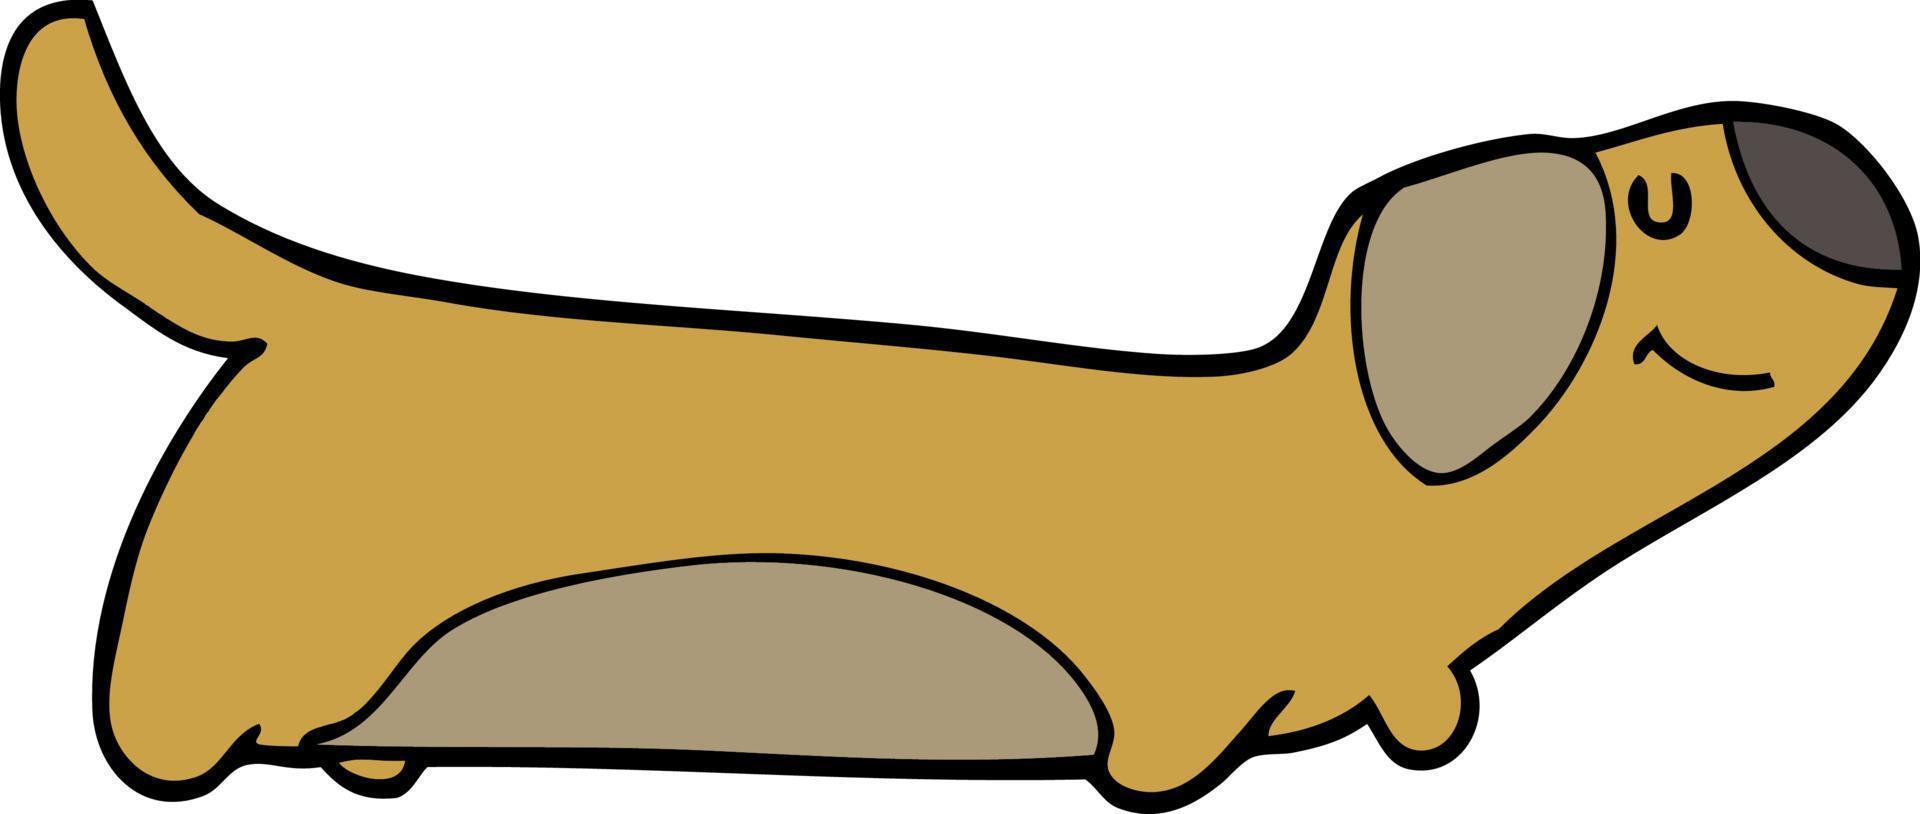 doodle character cartoon dog vector